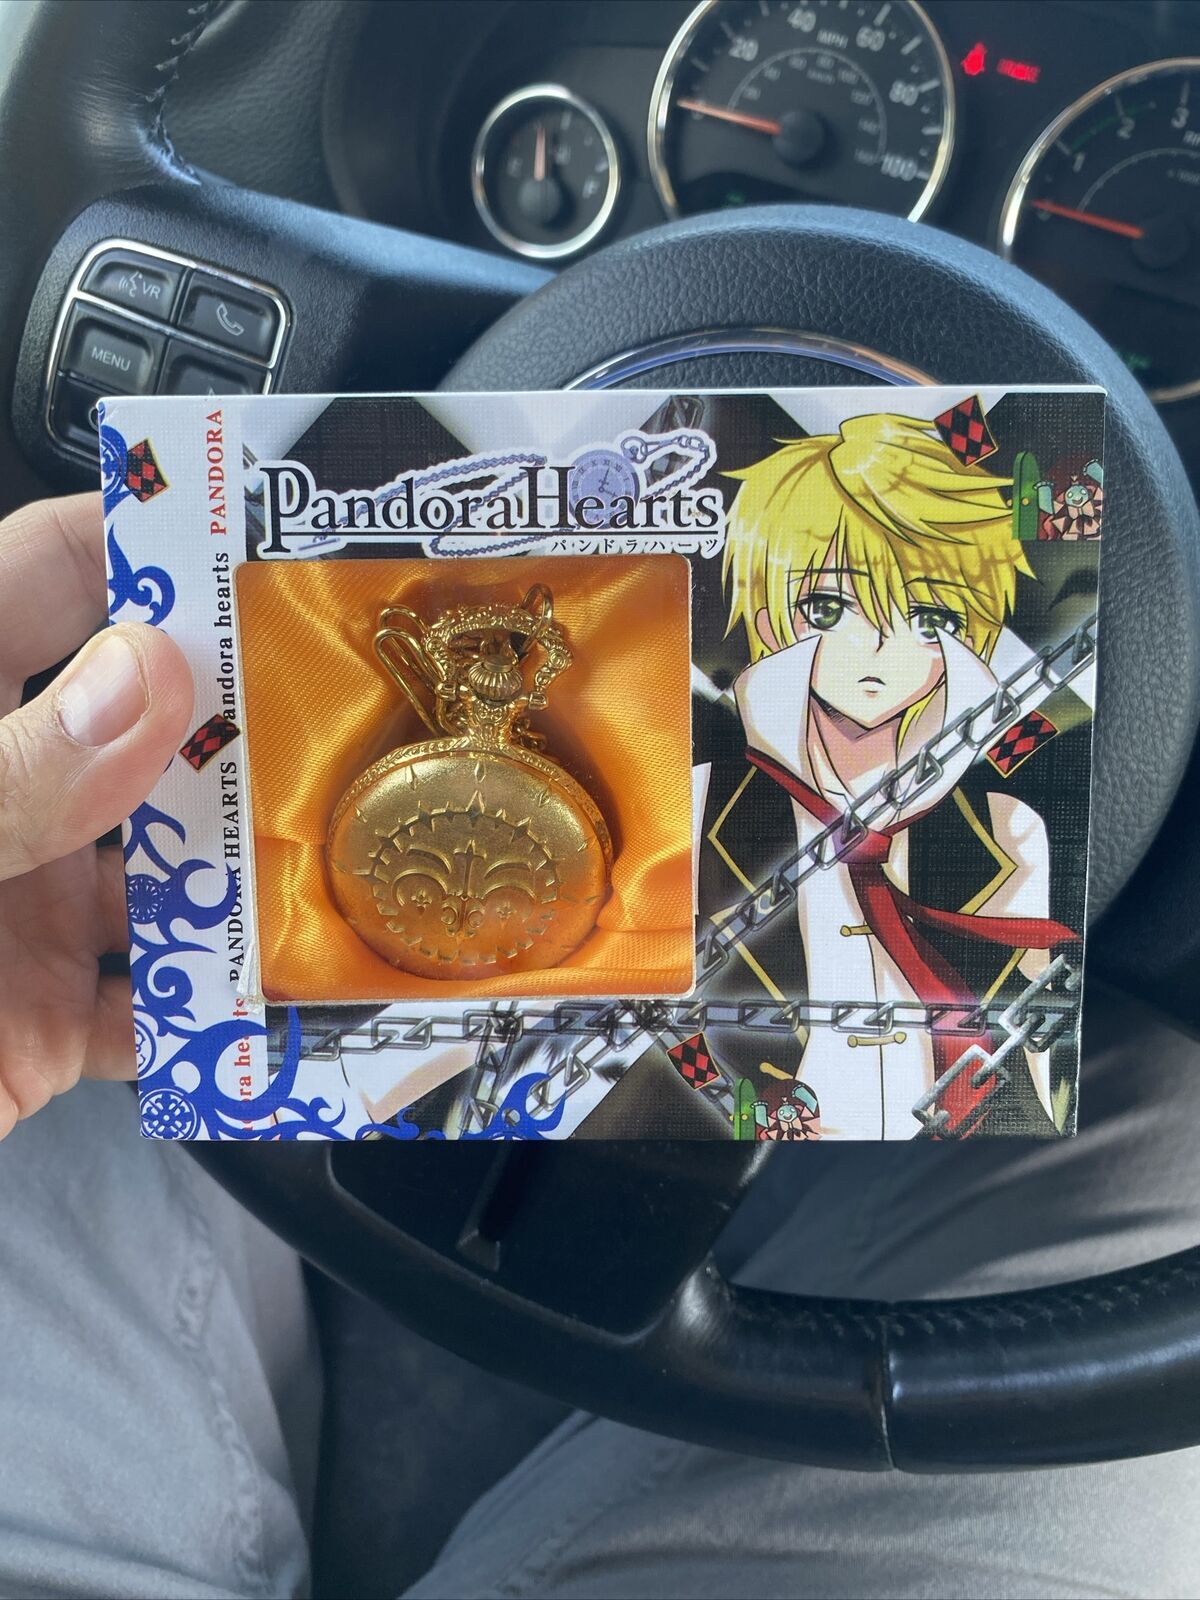 Pandora Hearts Pocket Watch From Japanese Anime In Original Box